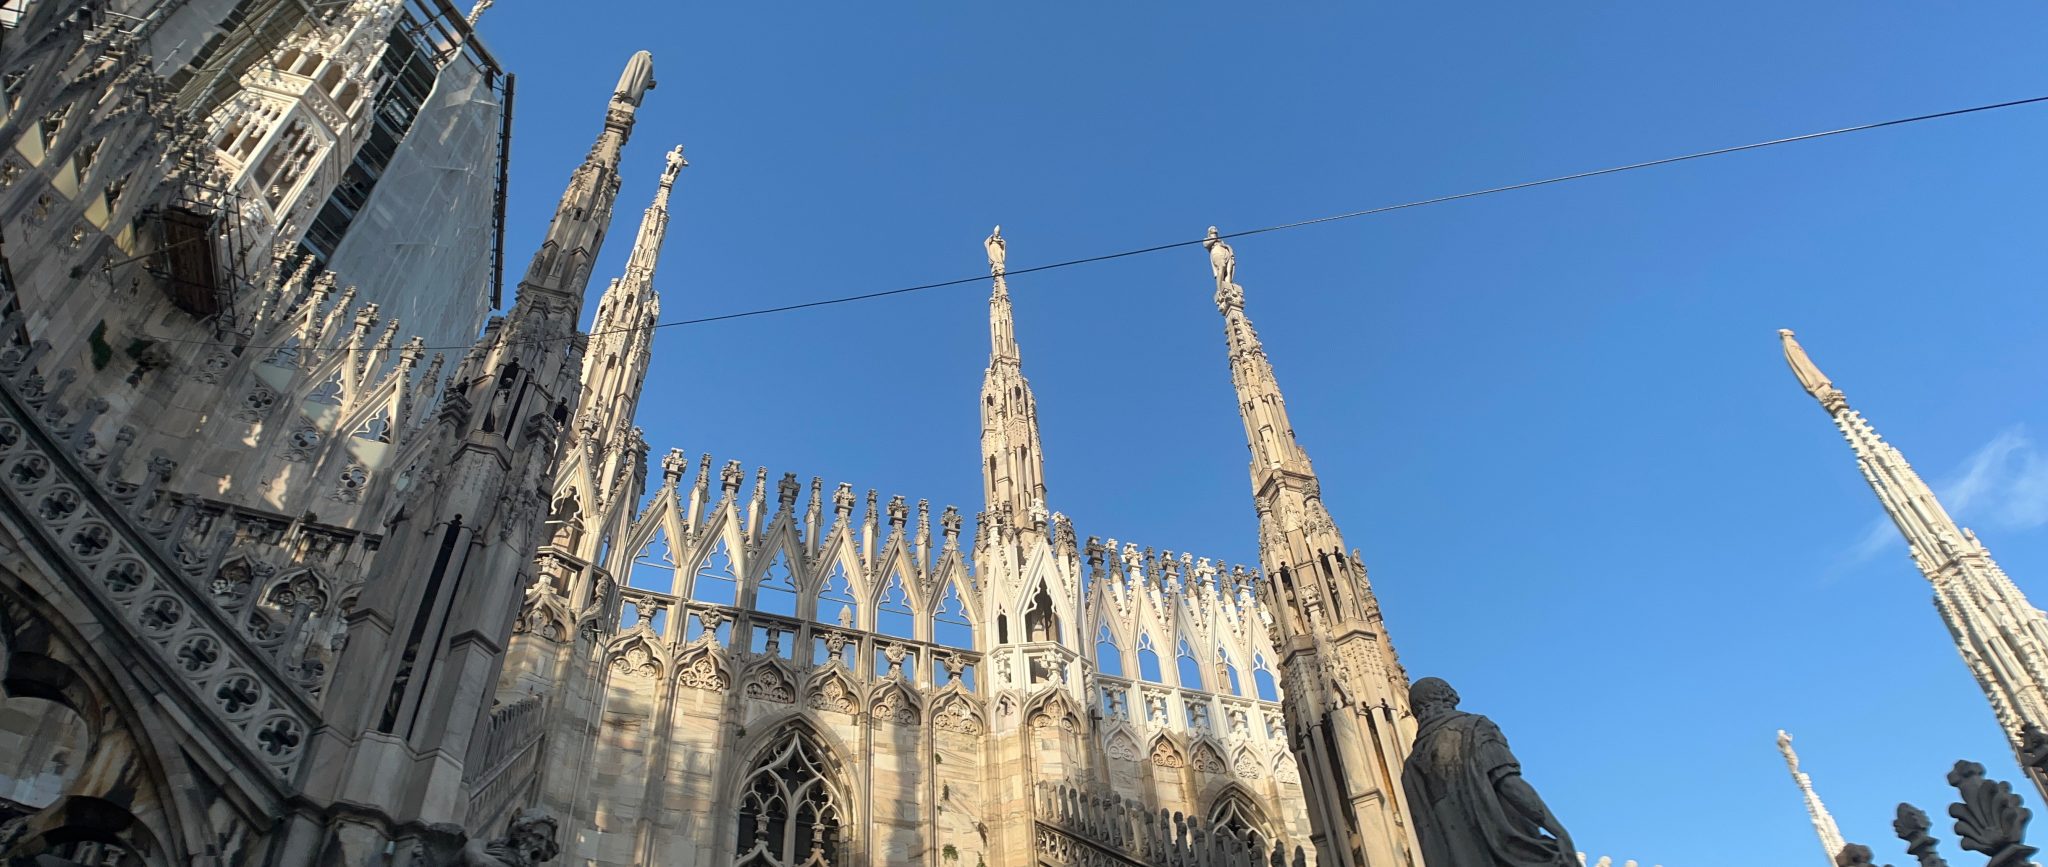 Statues on spires, Duomo di Milano, Milan, Italy